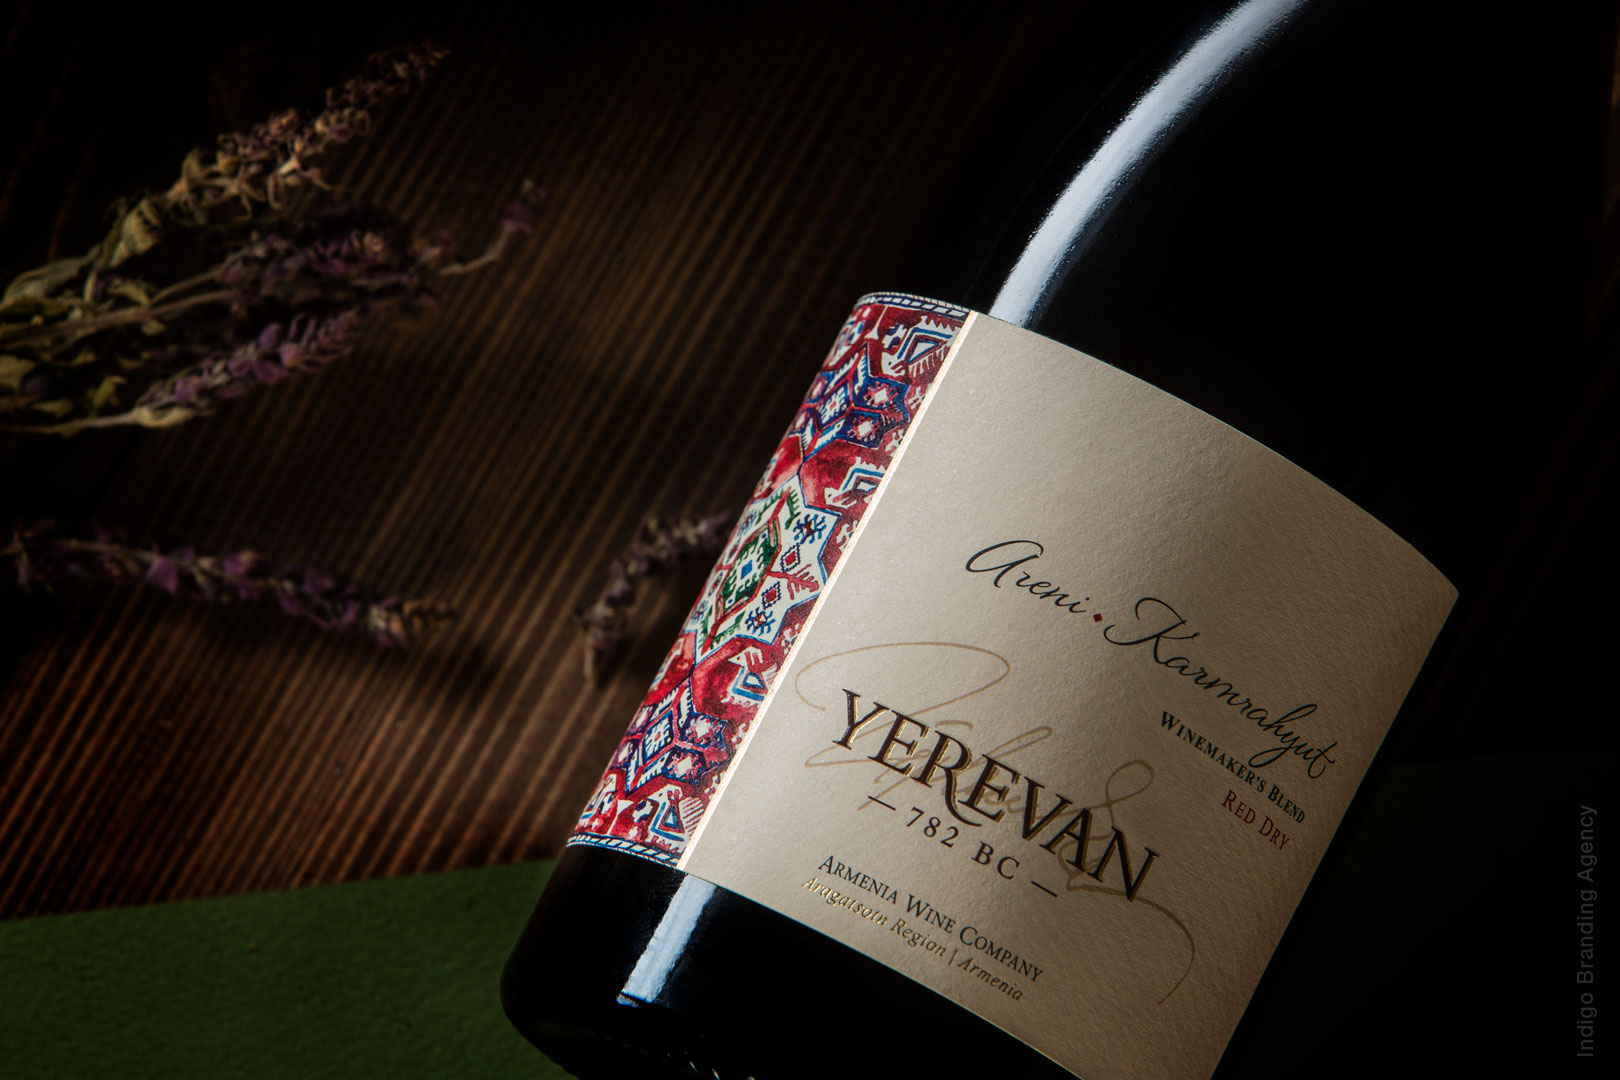 Yerevan 782 BC Wines branding and labeling by Indigo branding